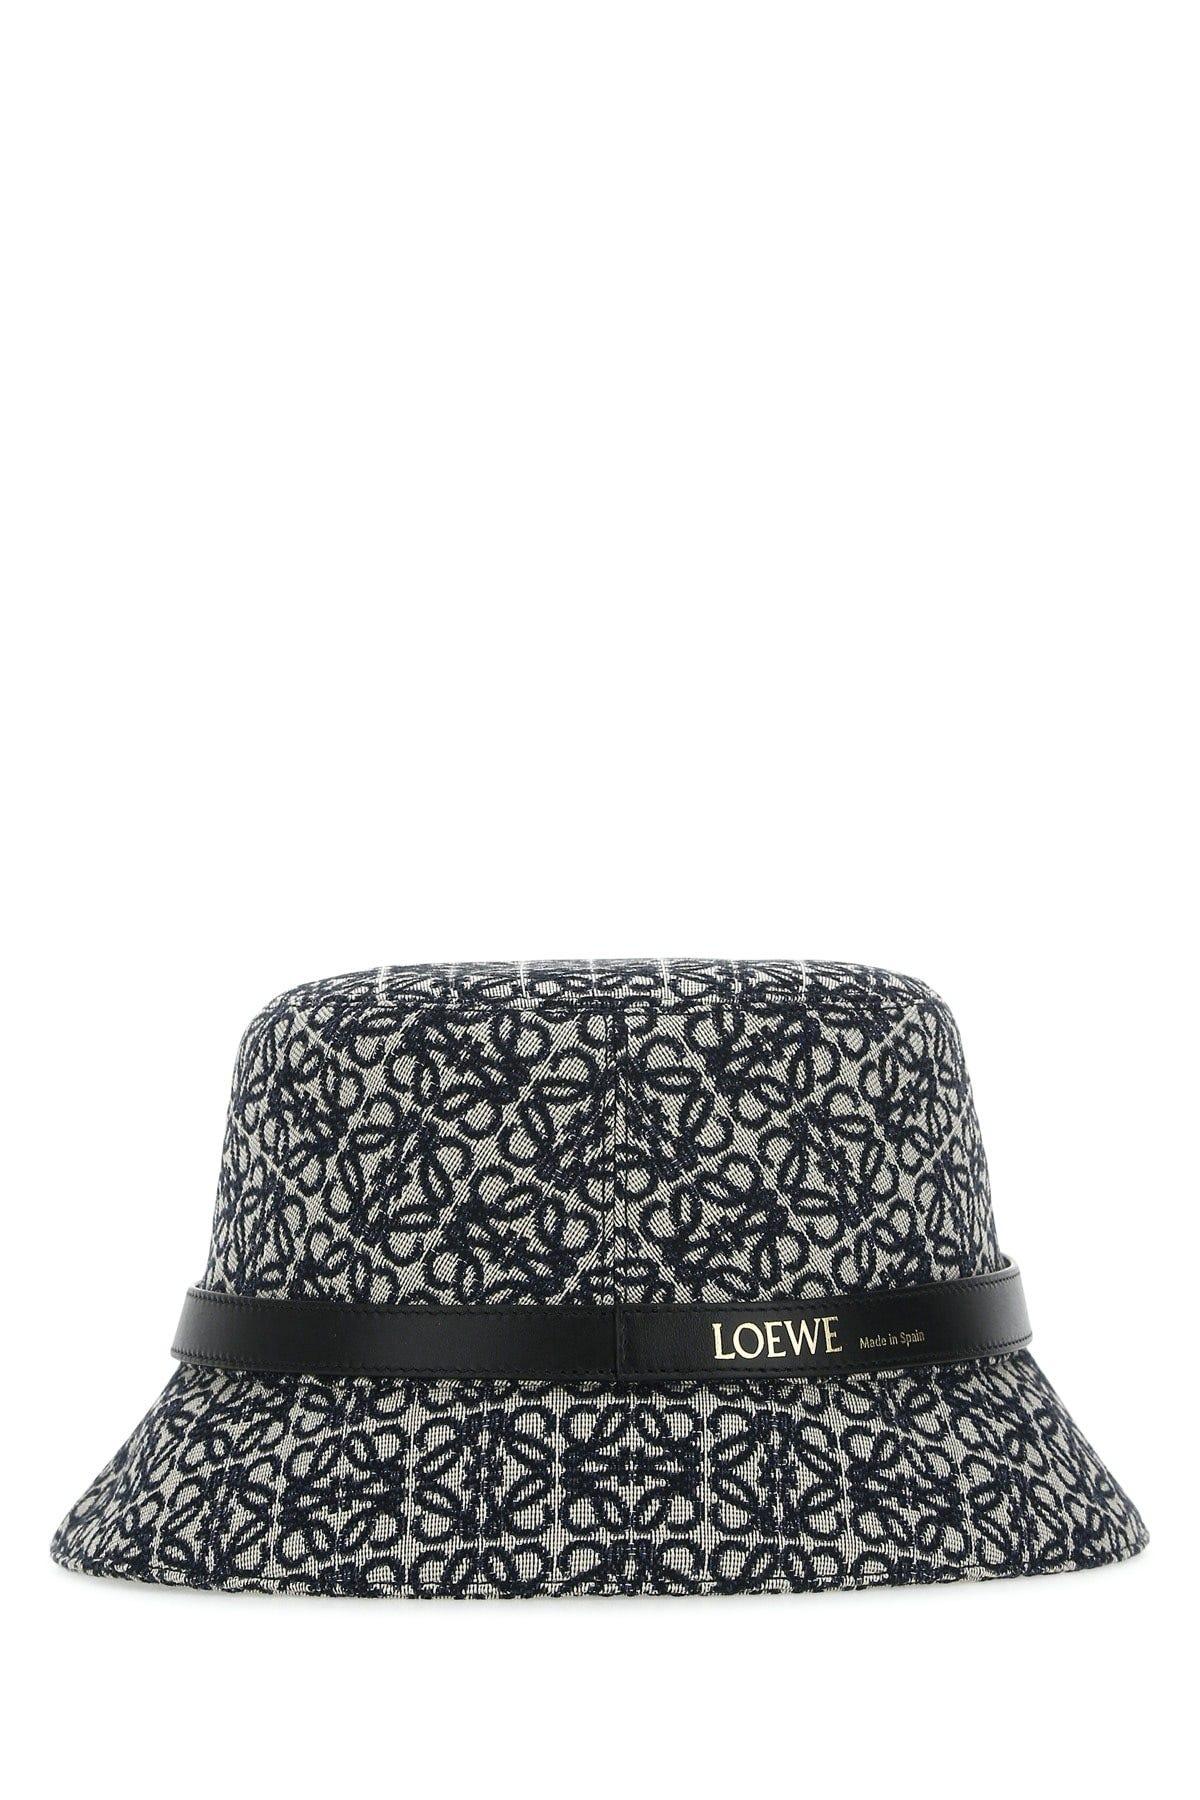 Christian Dior Frayed Denim Bucket Hat